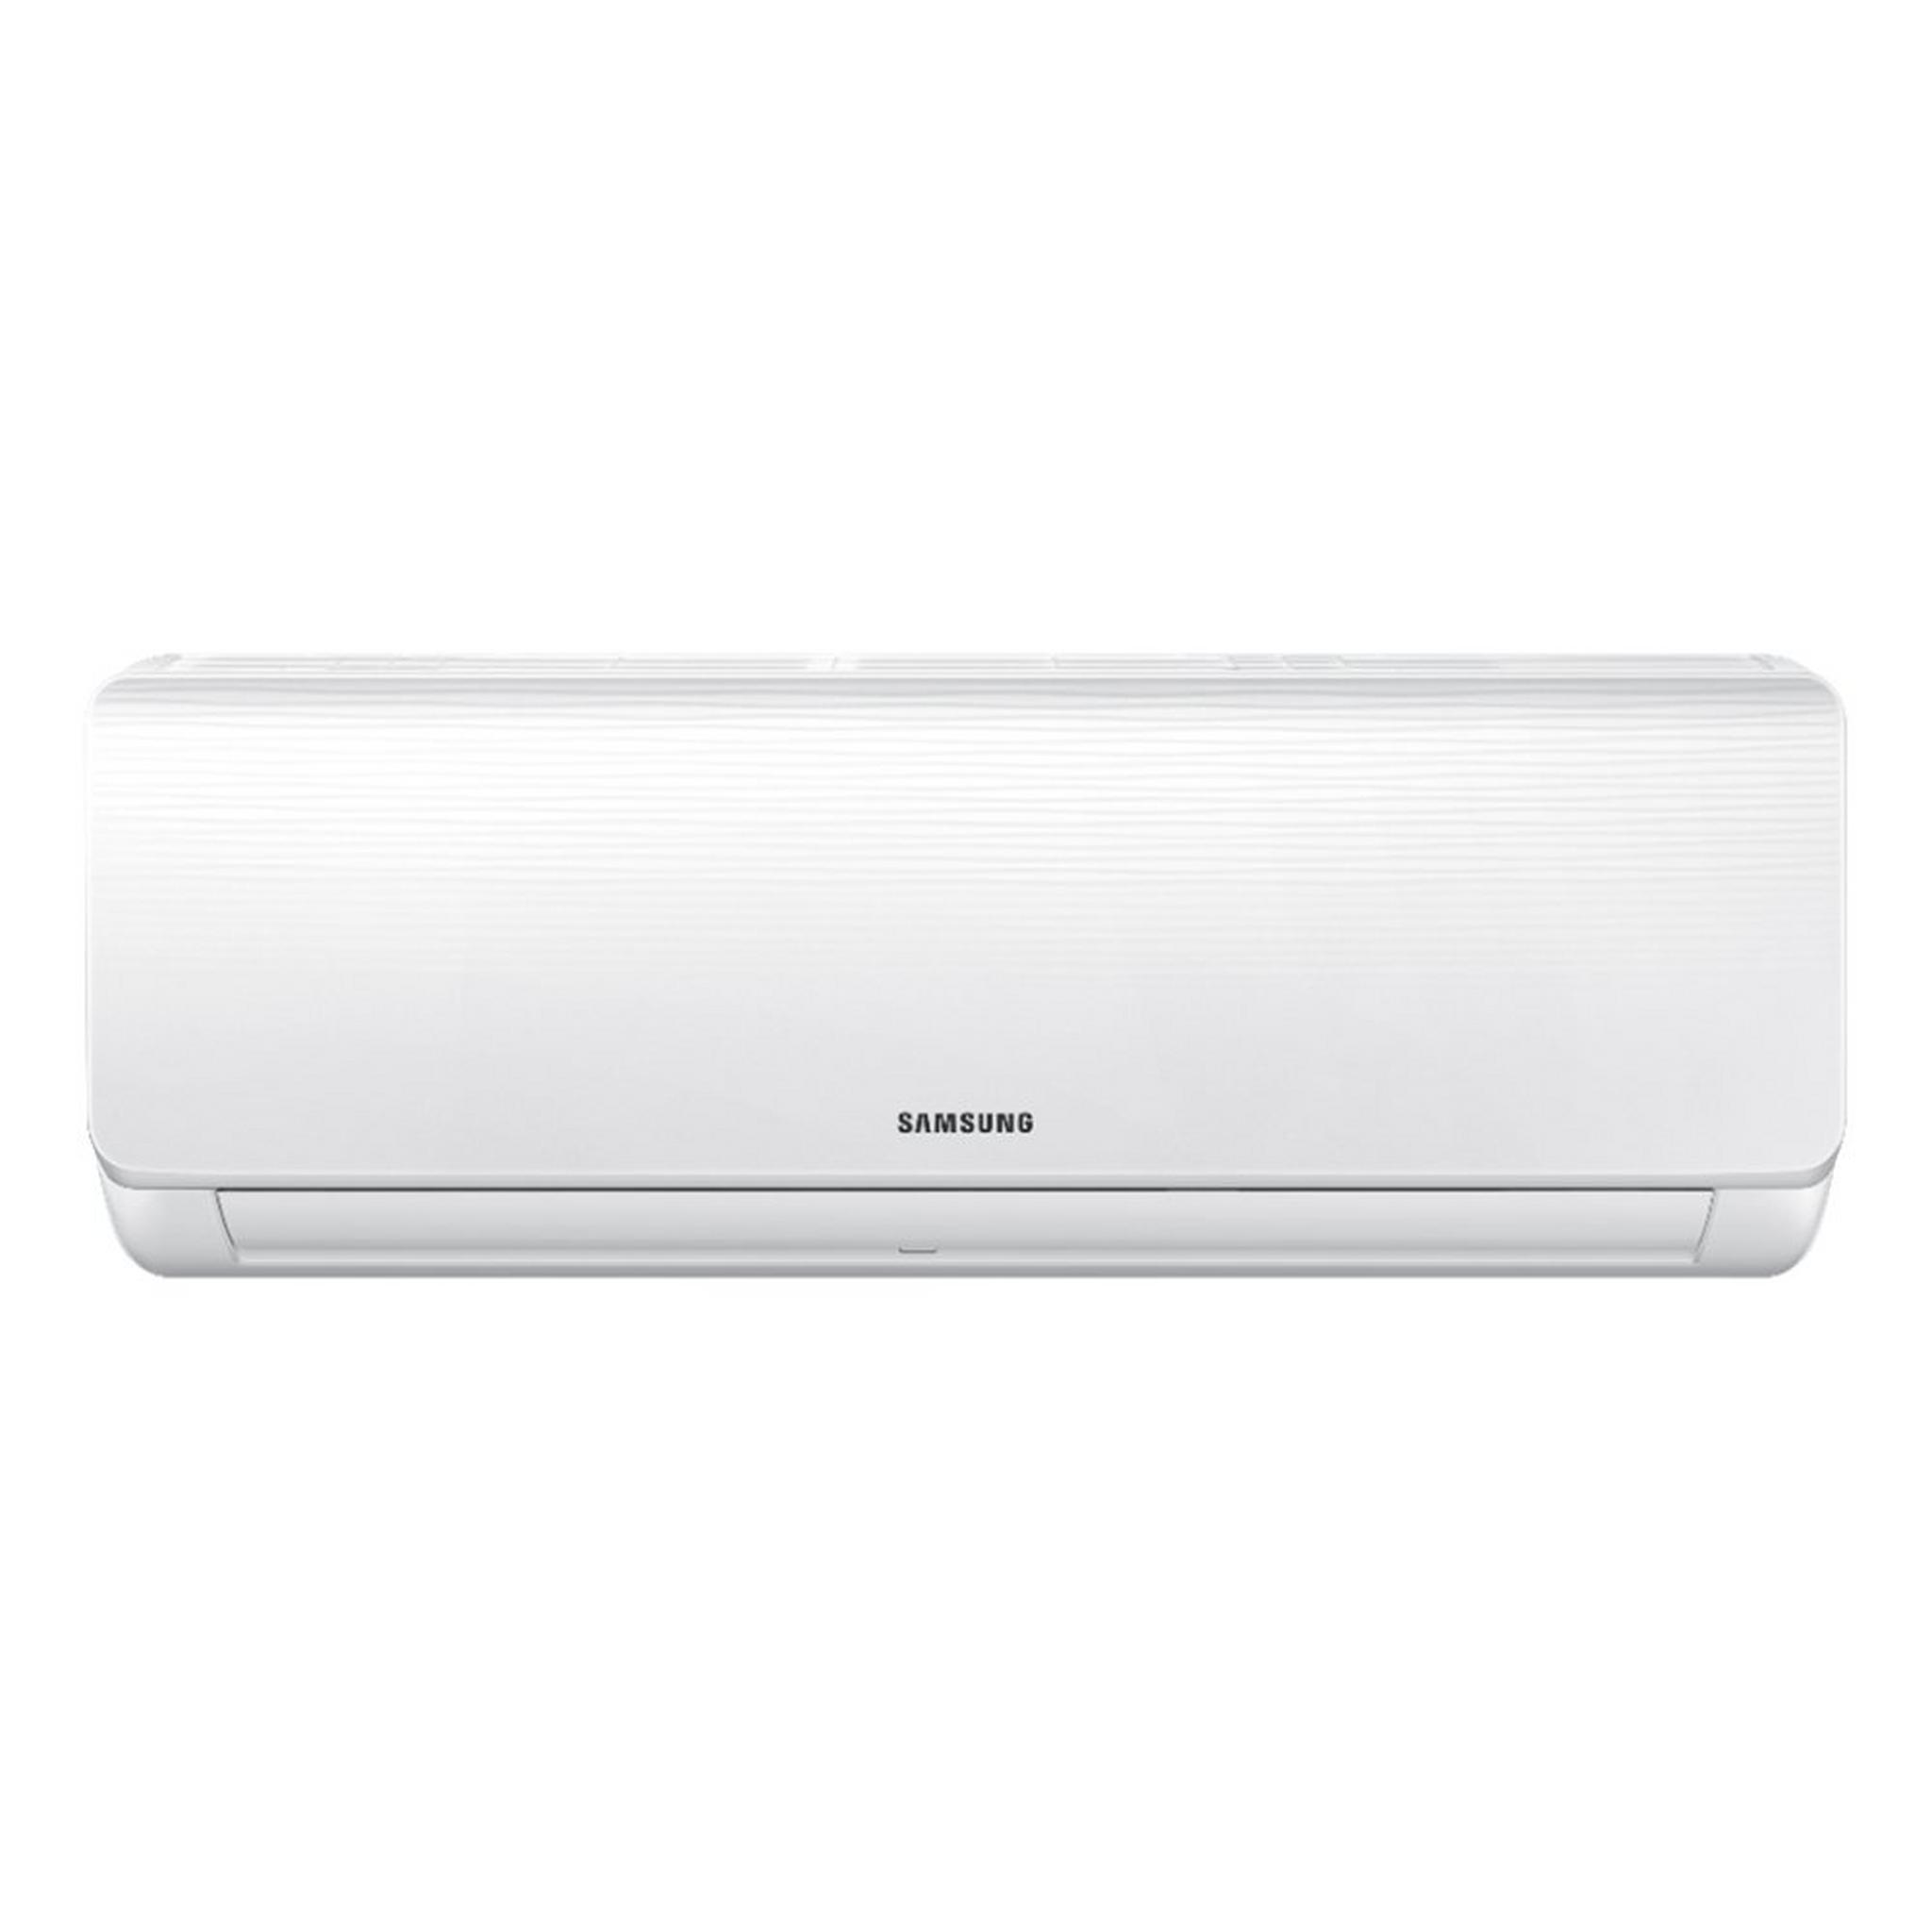 Samsung Split AC, 9523 BTU, Cooling Only, AR12BRHQLWK - White